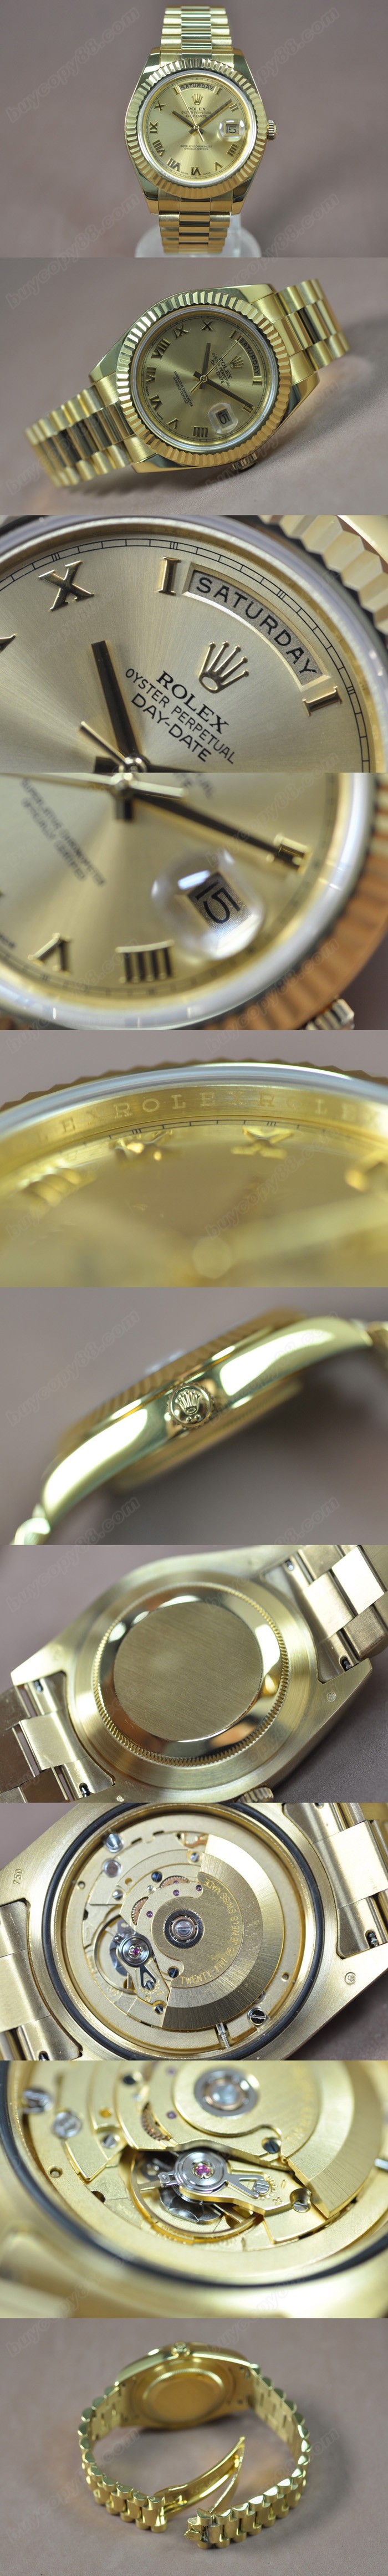 勞力士 Rolex Day Date 41mm Full Yellow Gold A-2836 自動機芯搭載0